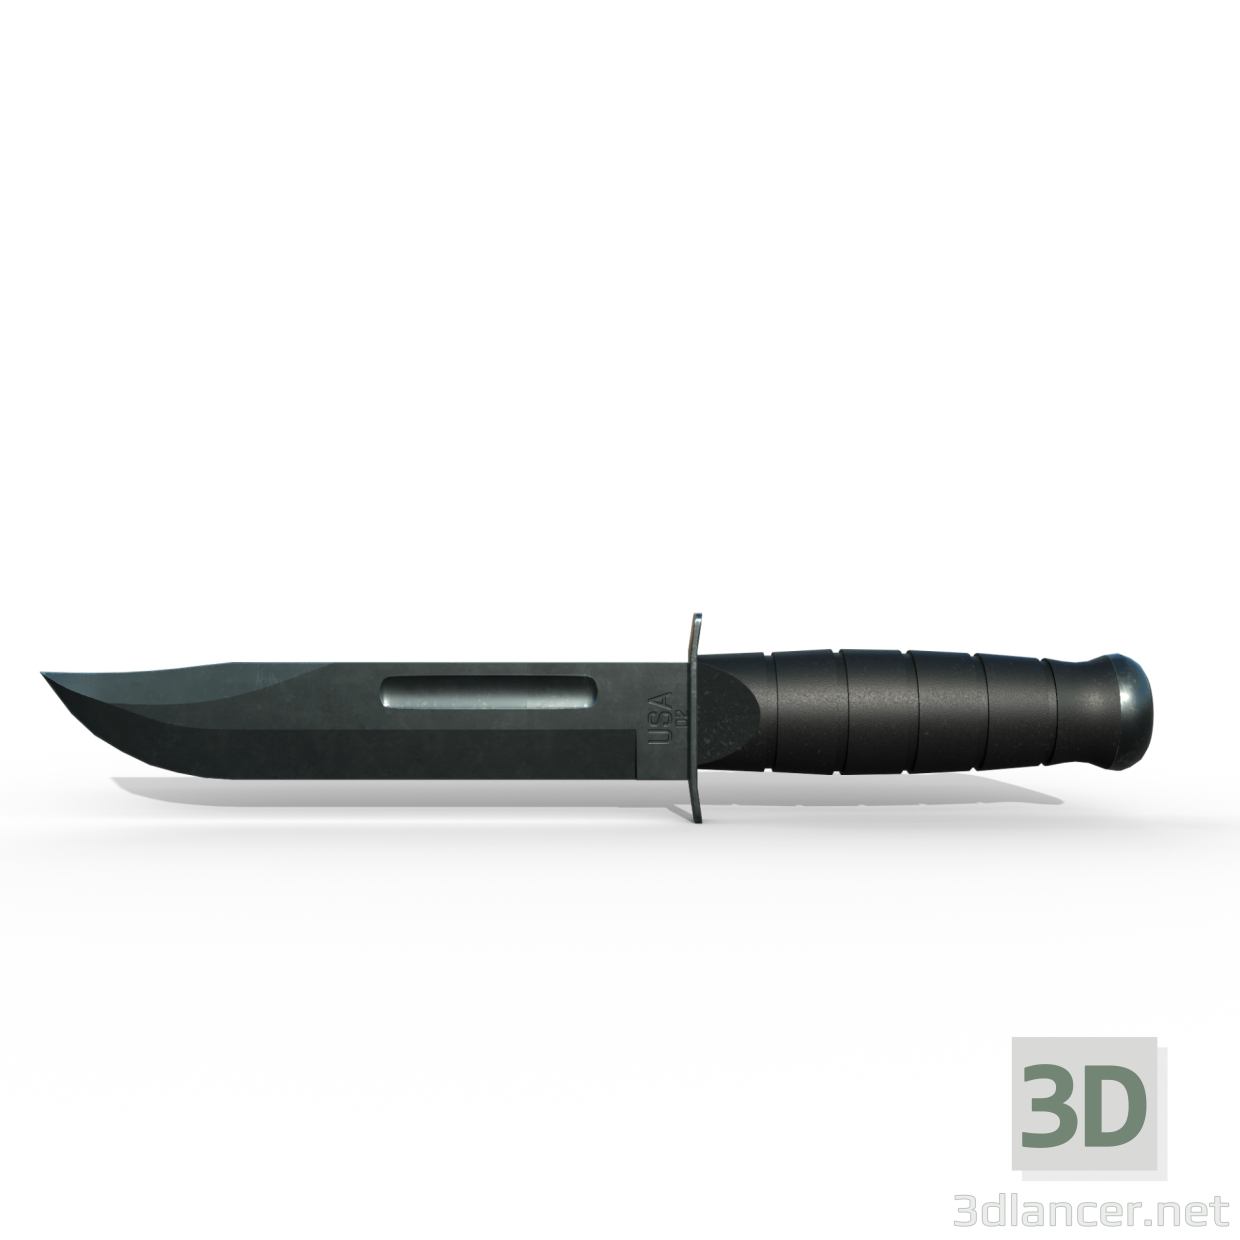 3d USA Army knife model buy - render